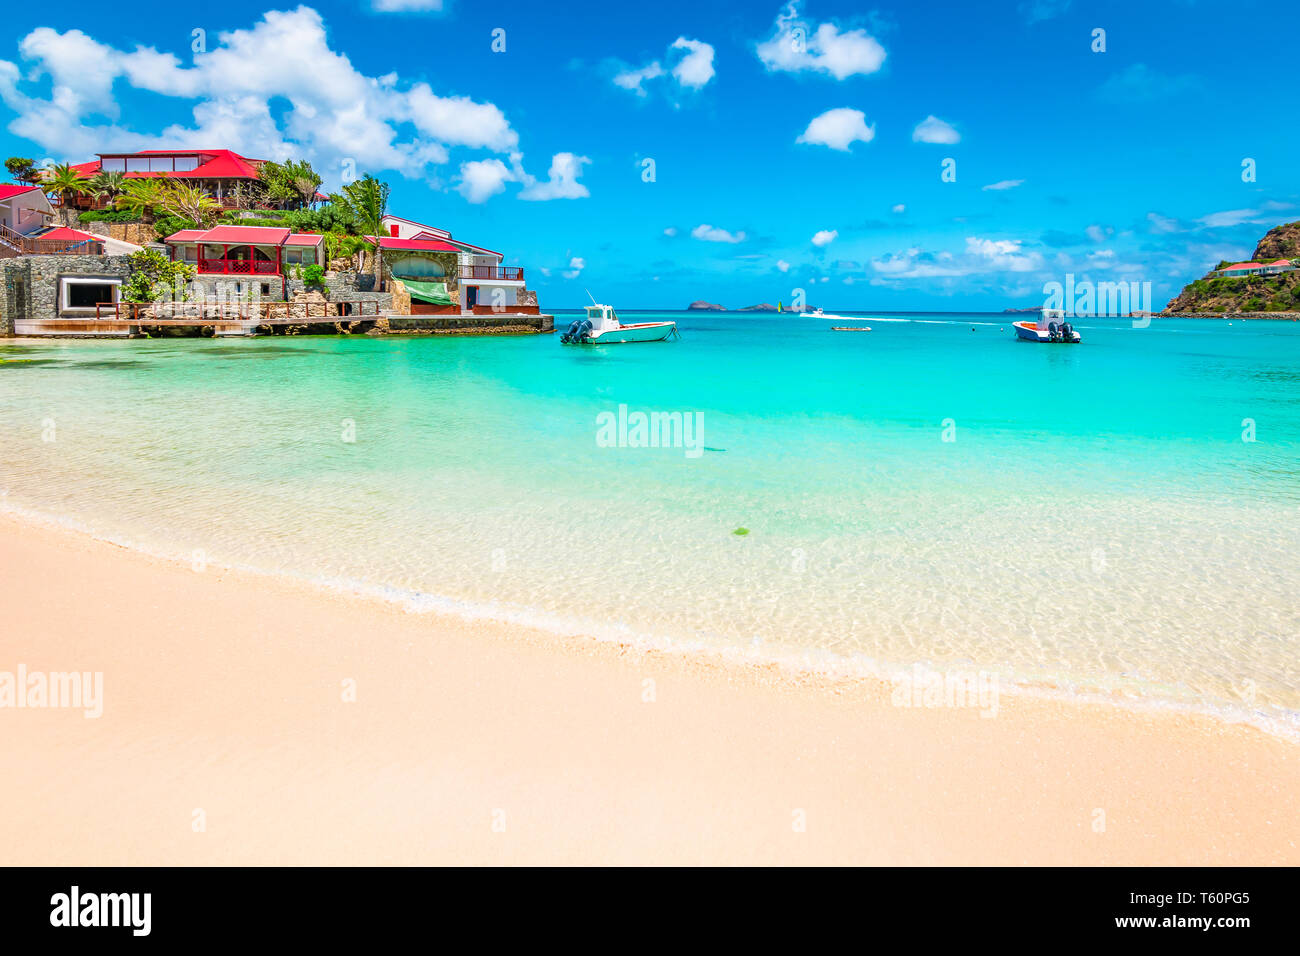 Beach in St Barts, Caribbean Sea. Stock Photo